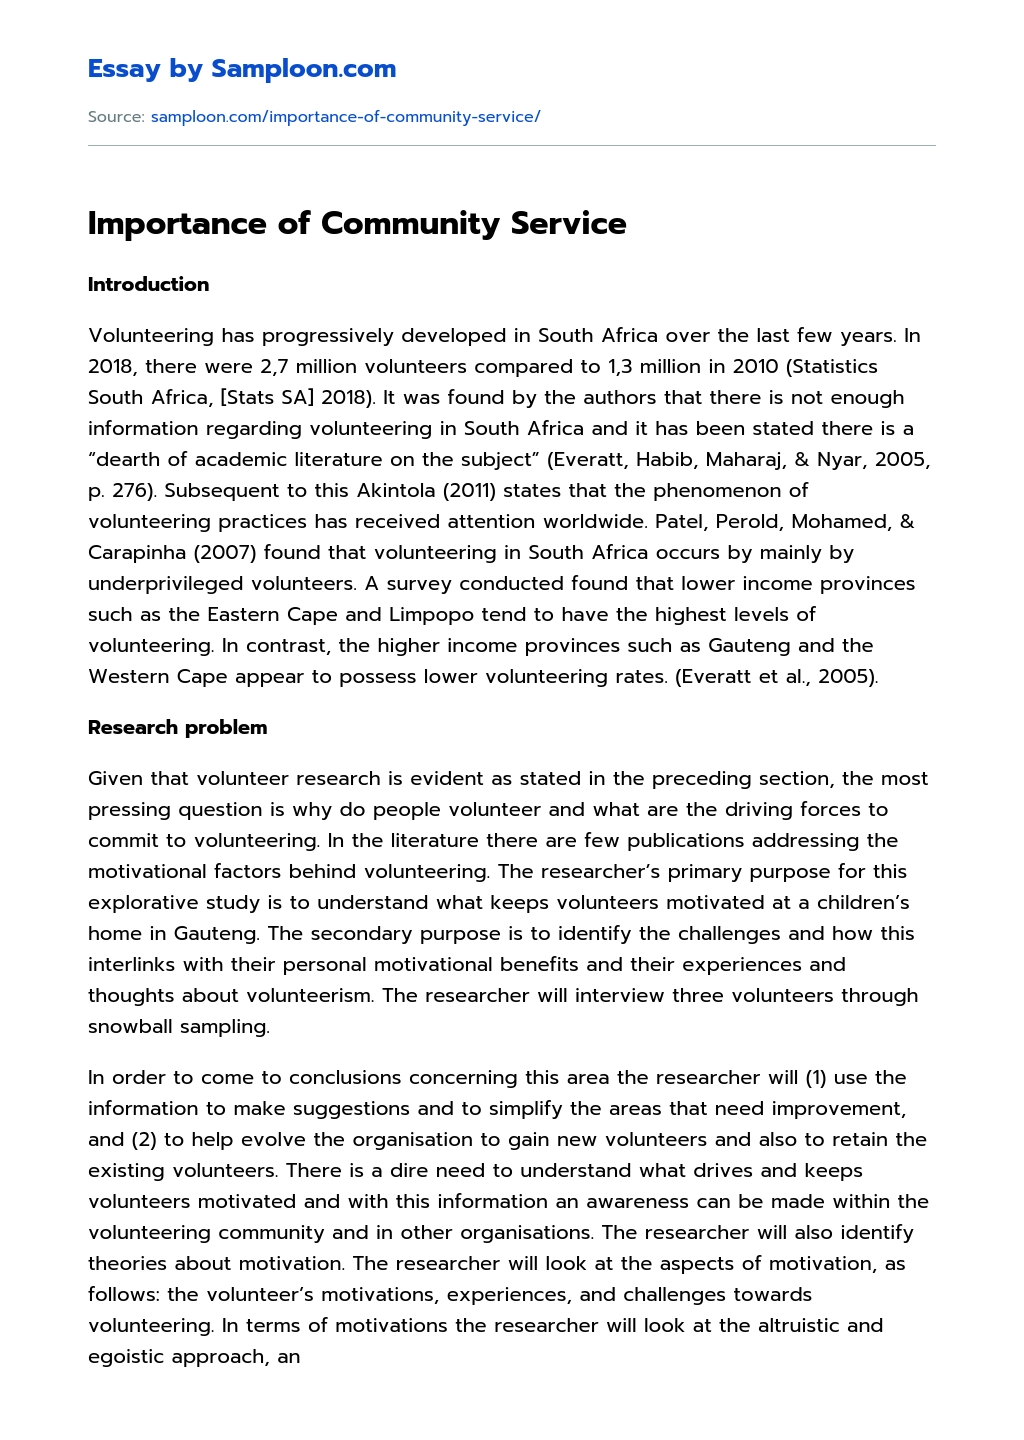 importance of community service essay